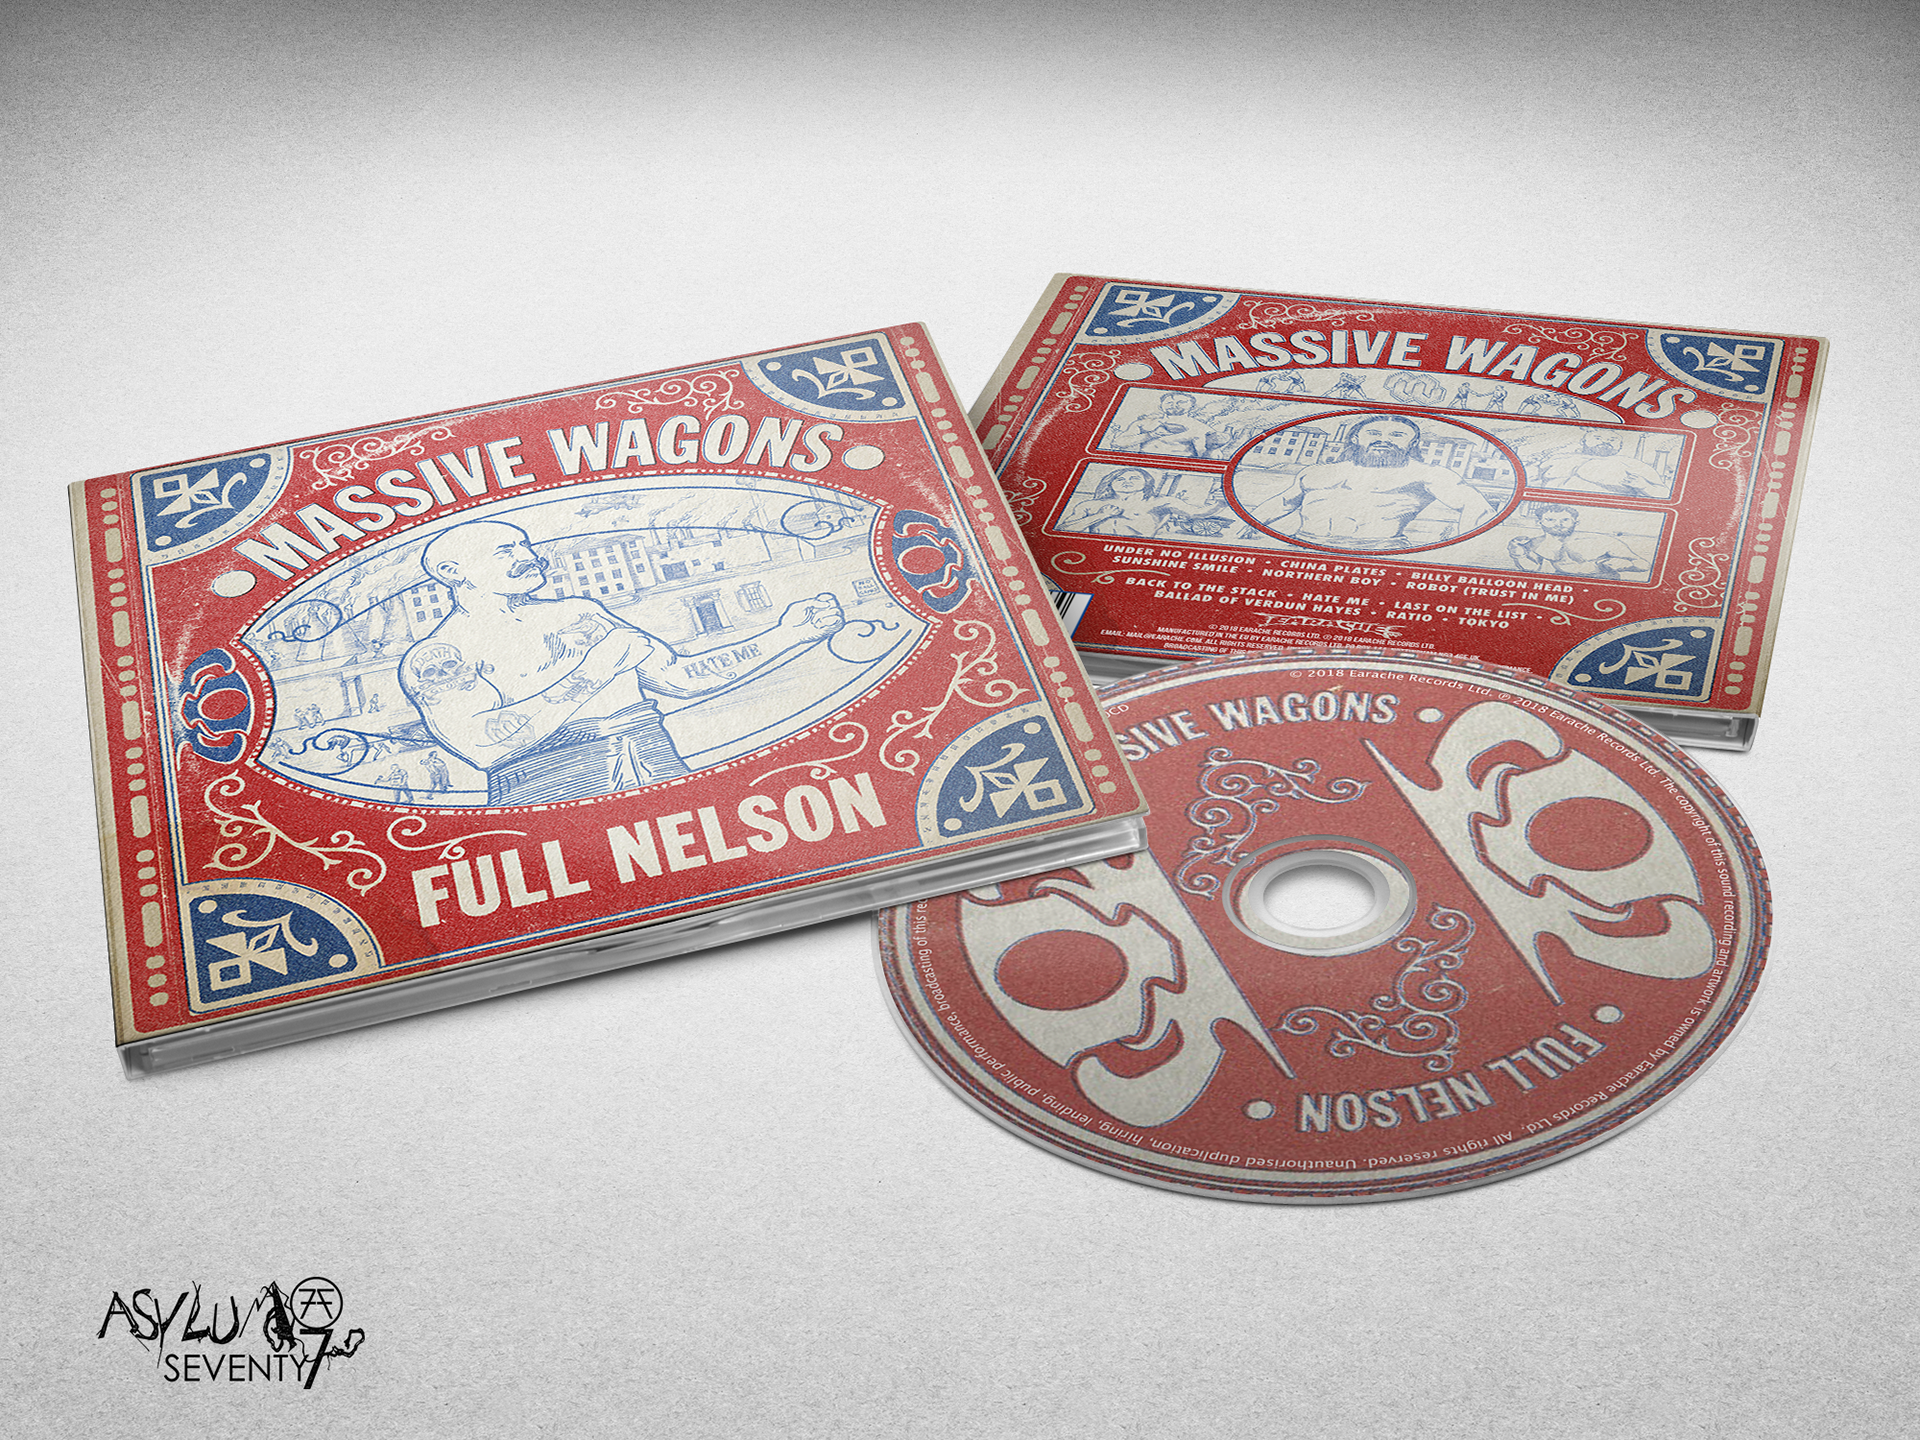 bloed Gewaad samenwerken ASYLUMseventy7 - Massive Wagons - Full Nelson CD and LP artwork